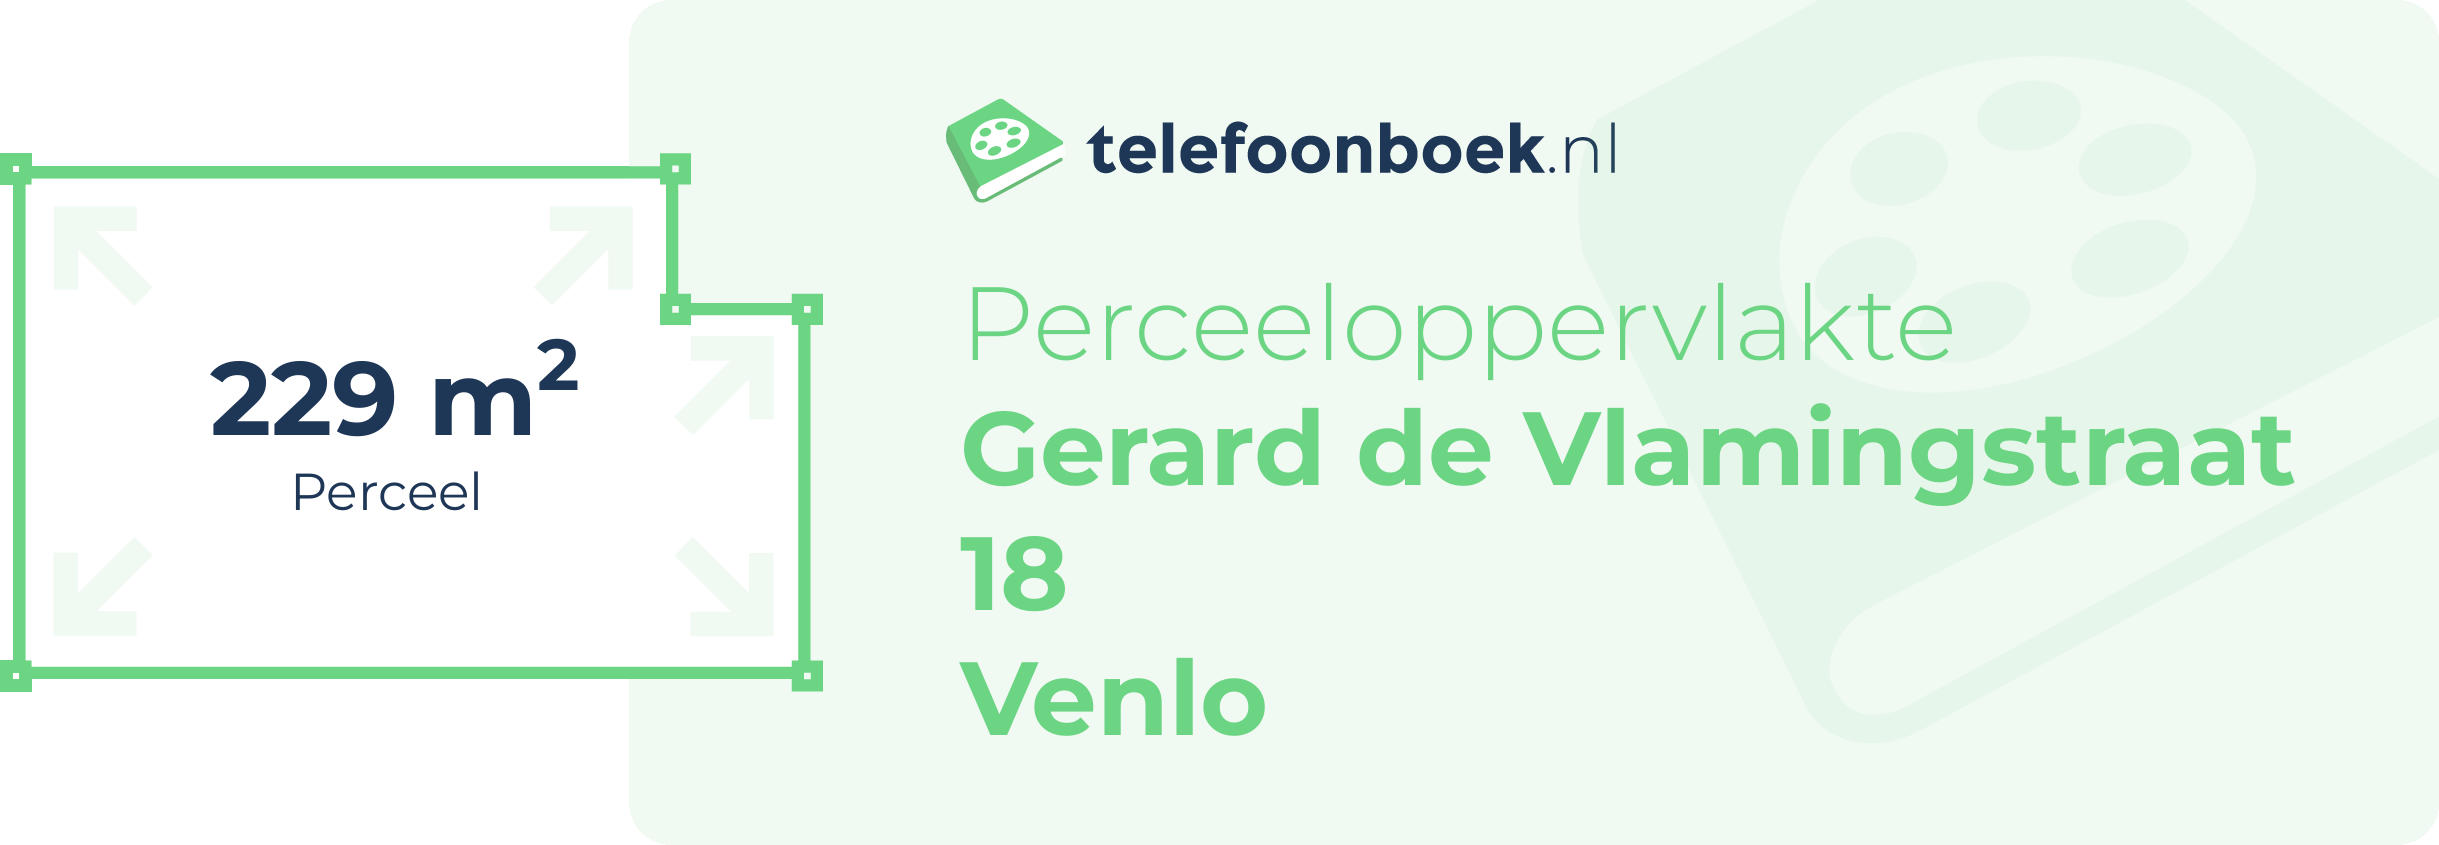 Perceeloppervlakte Gerard De Vlamingstraat 18 Venlo